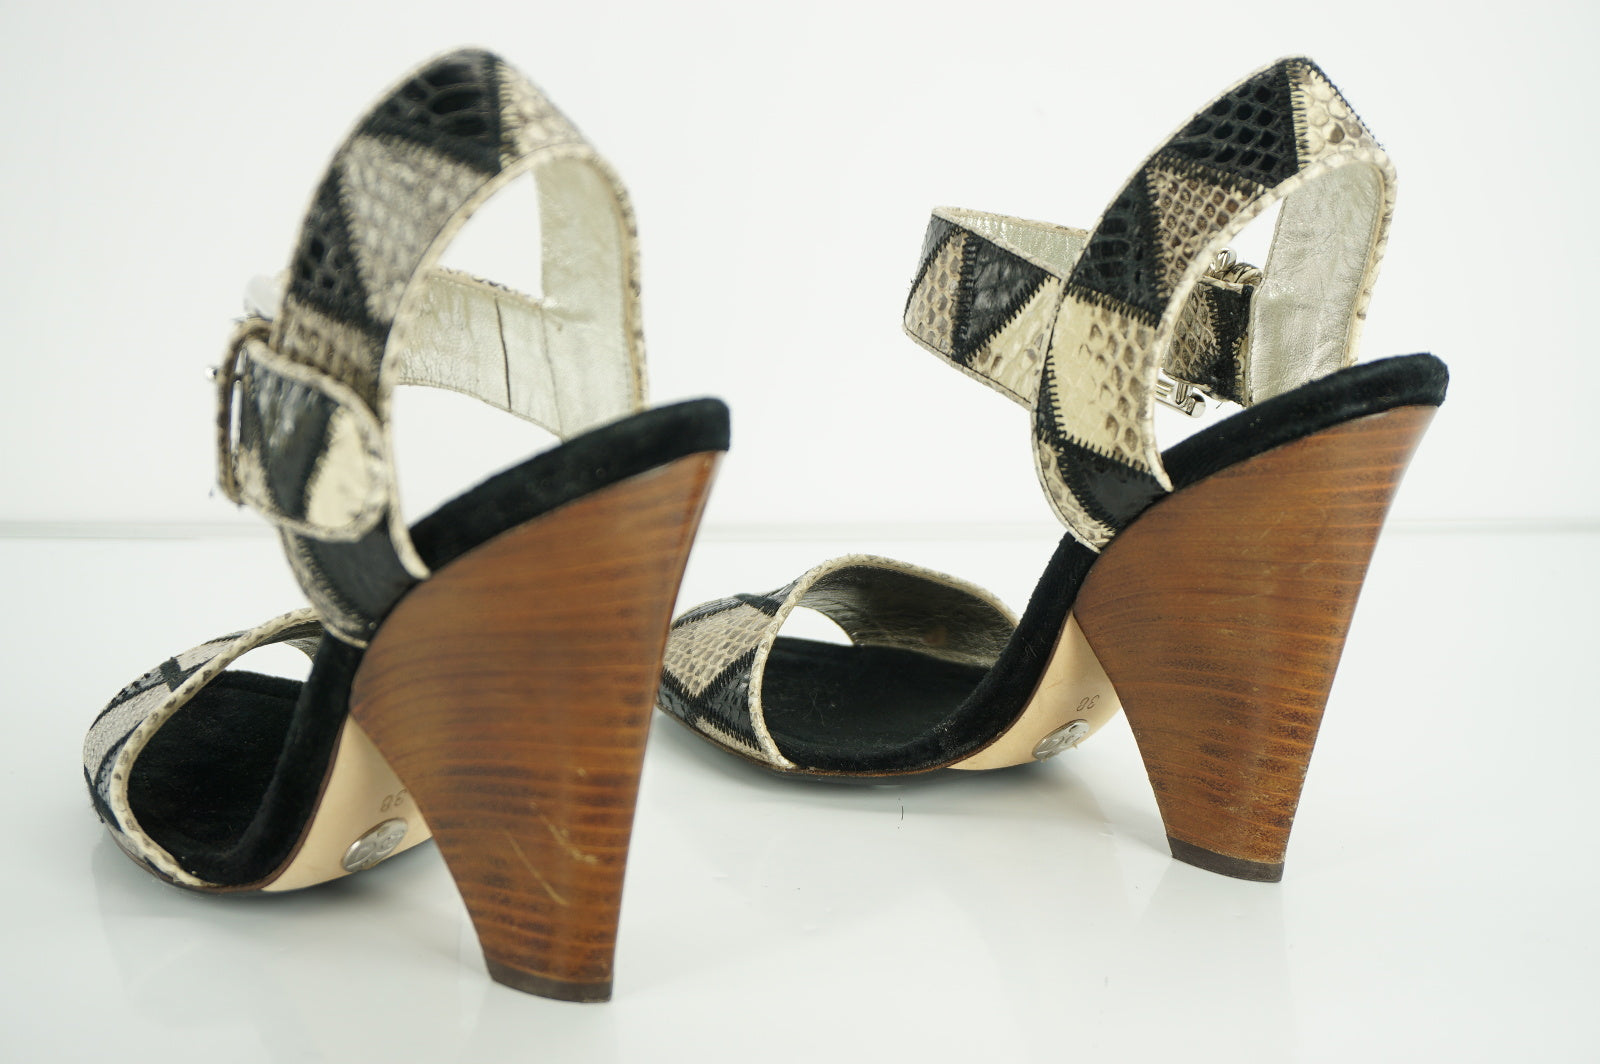 Dolce & Gabbana Diamond Snake Print Ankle Strap Sandals SZ 8 New high heels $775